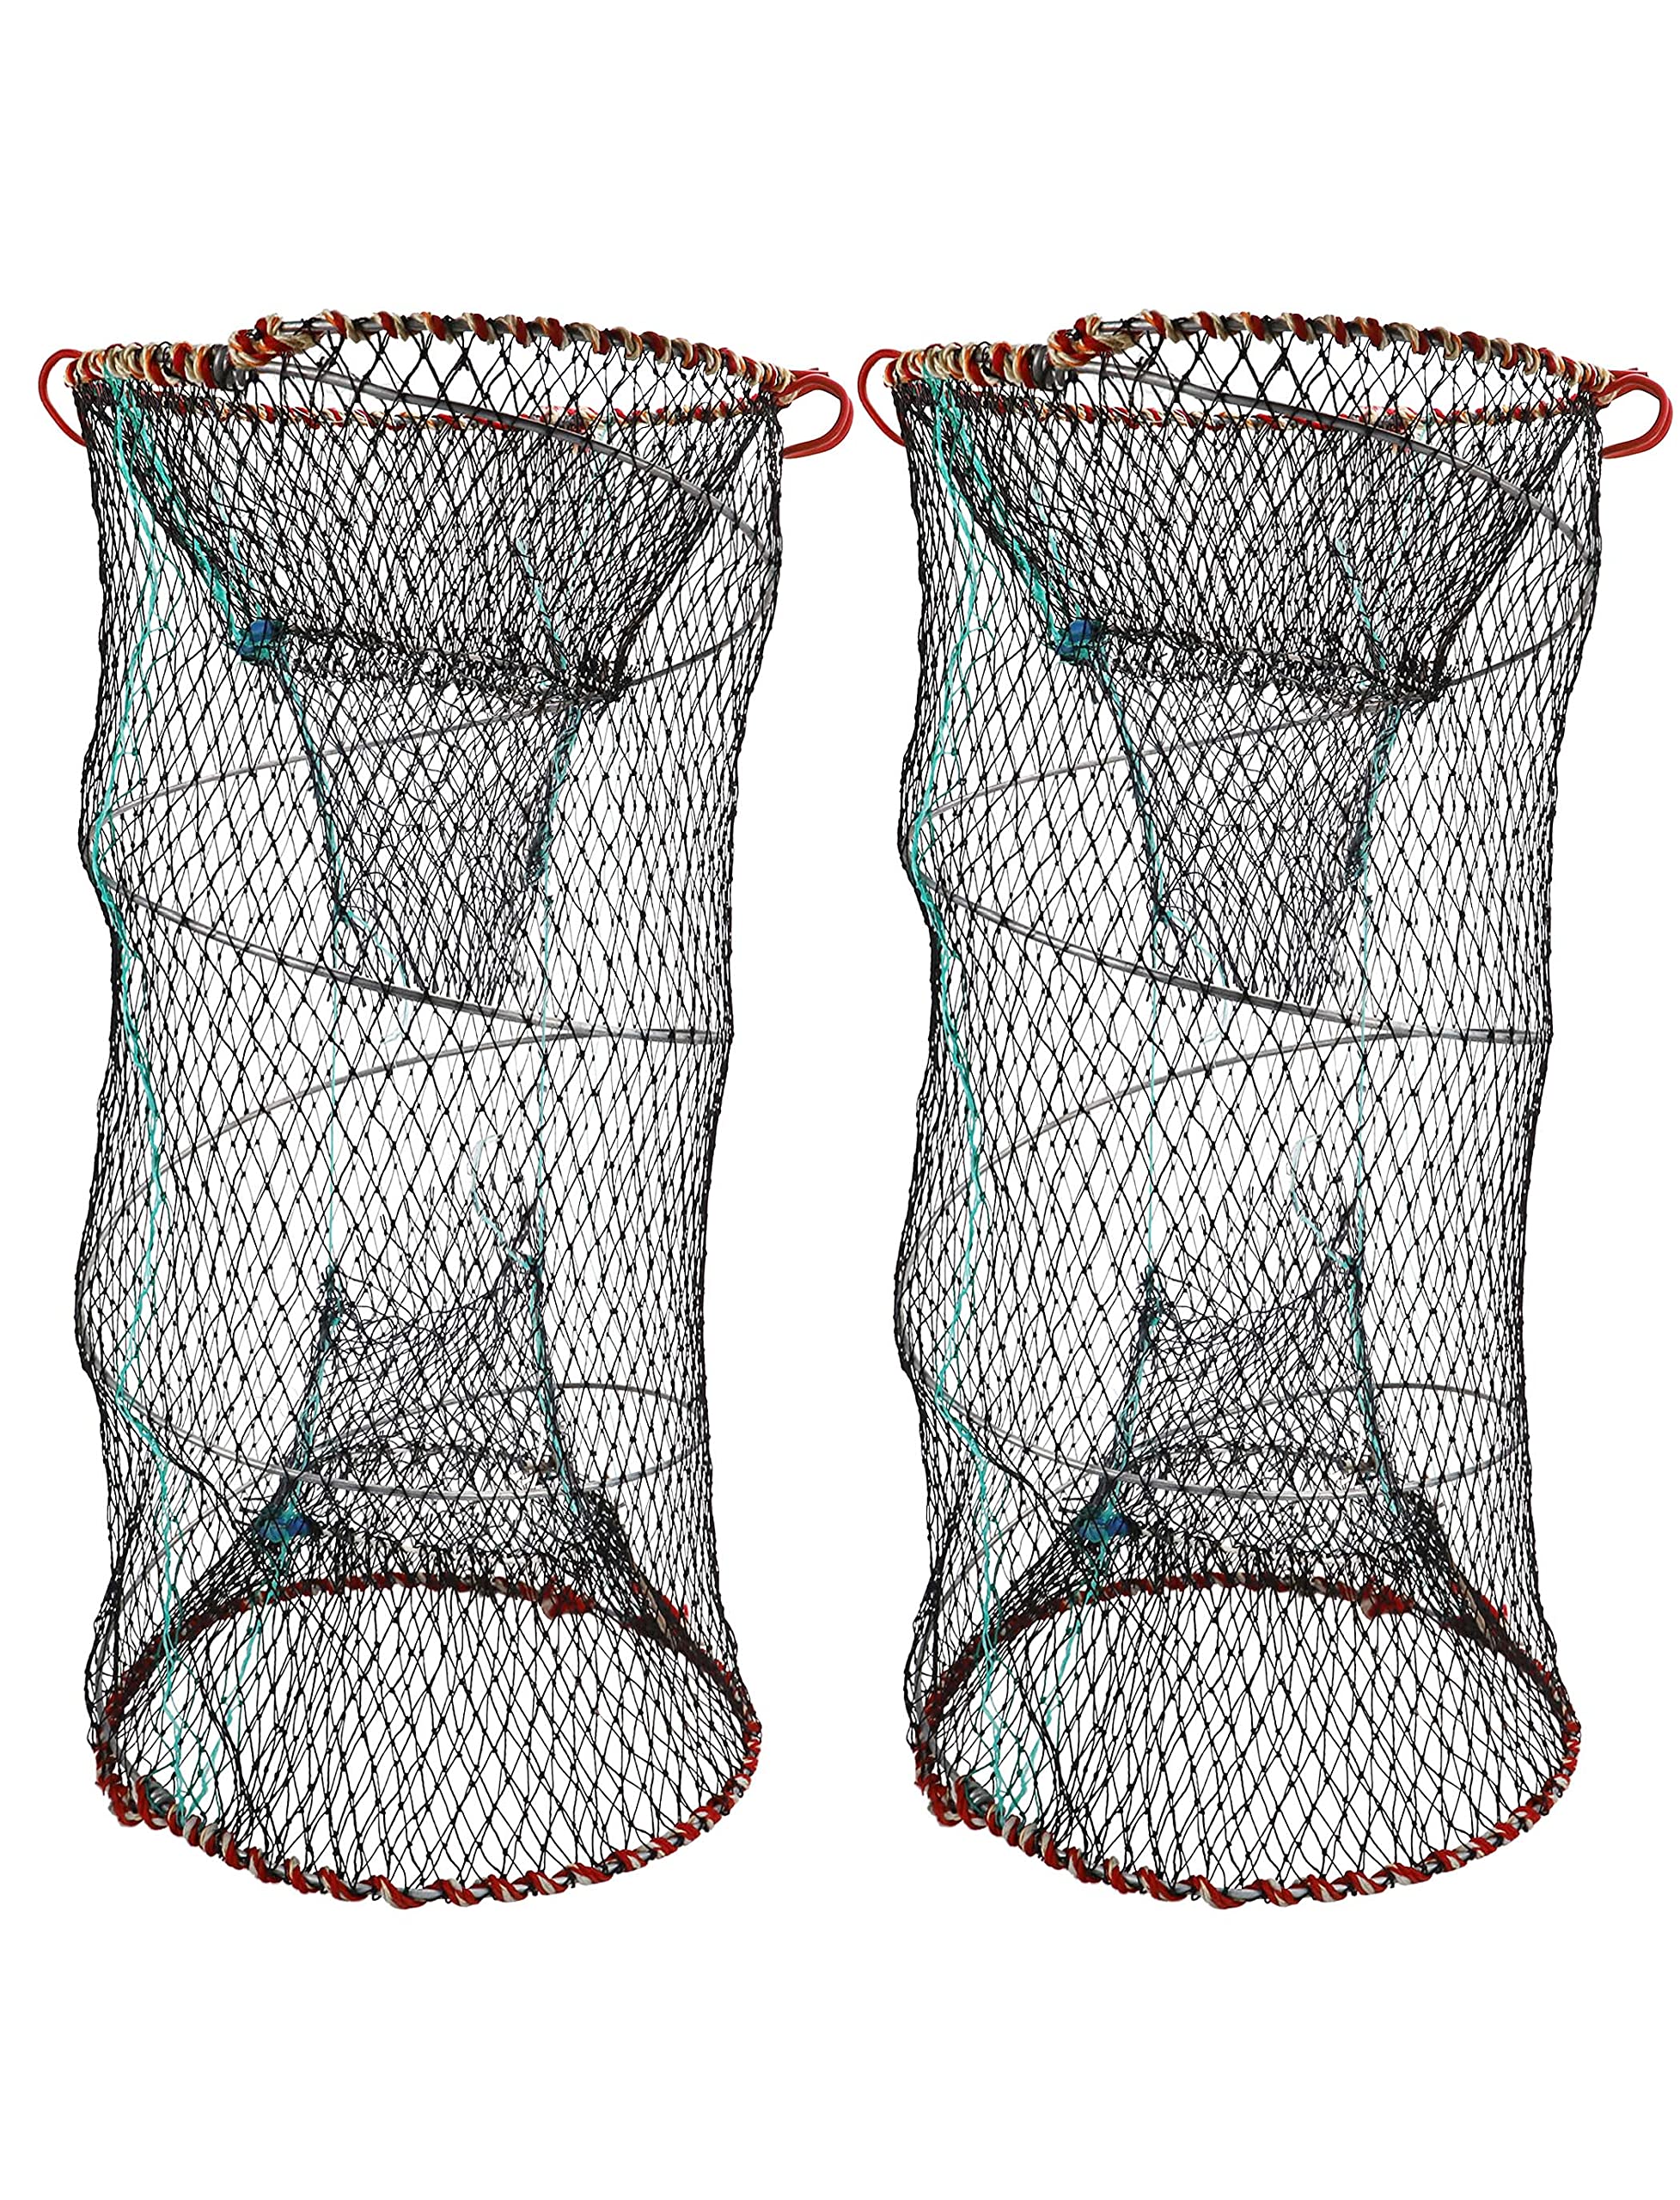  Drasry Fishing Bait Trap Foldable Fish Minnow Crab